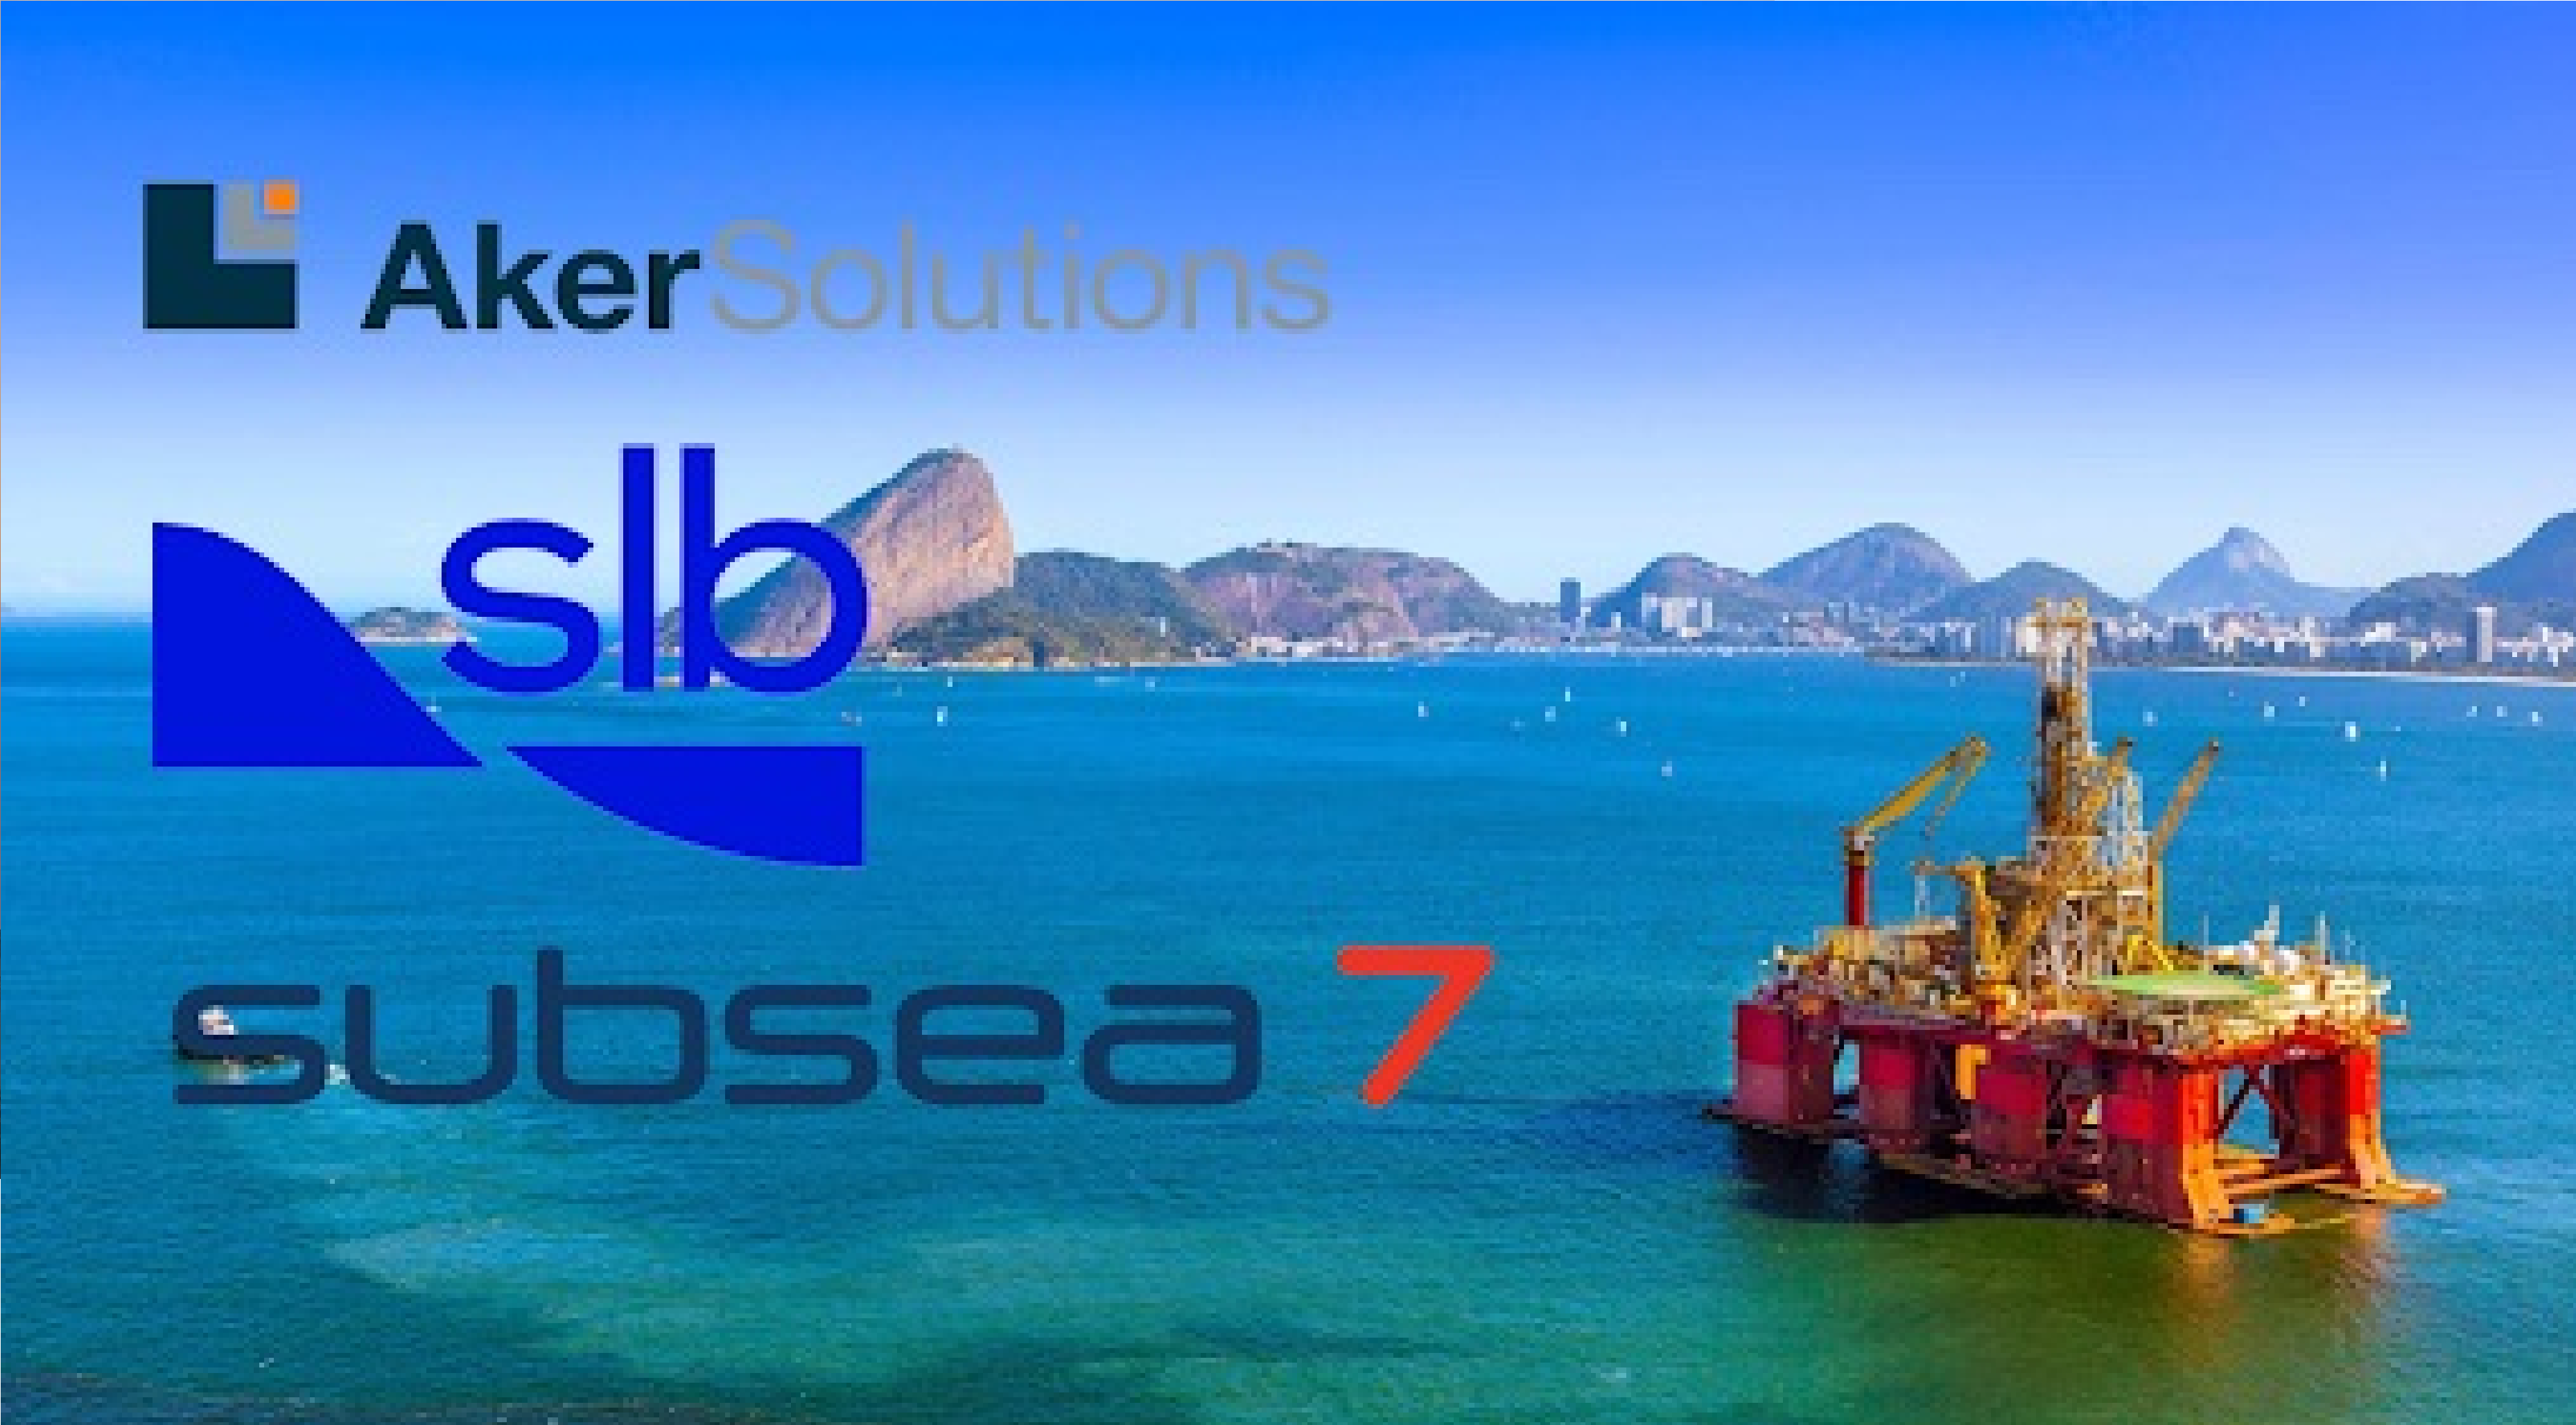 pcs: subsea, aker solution, SLB